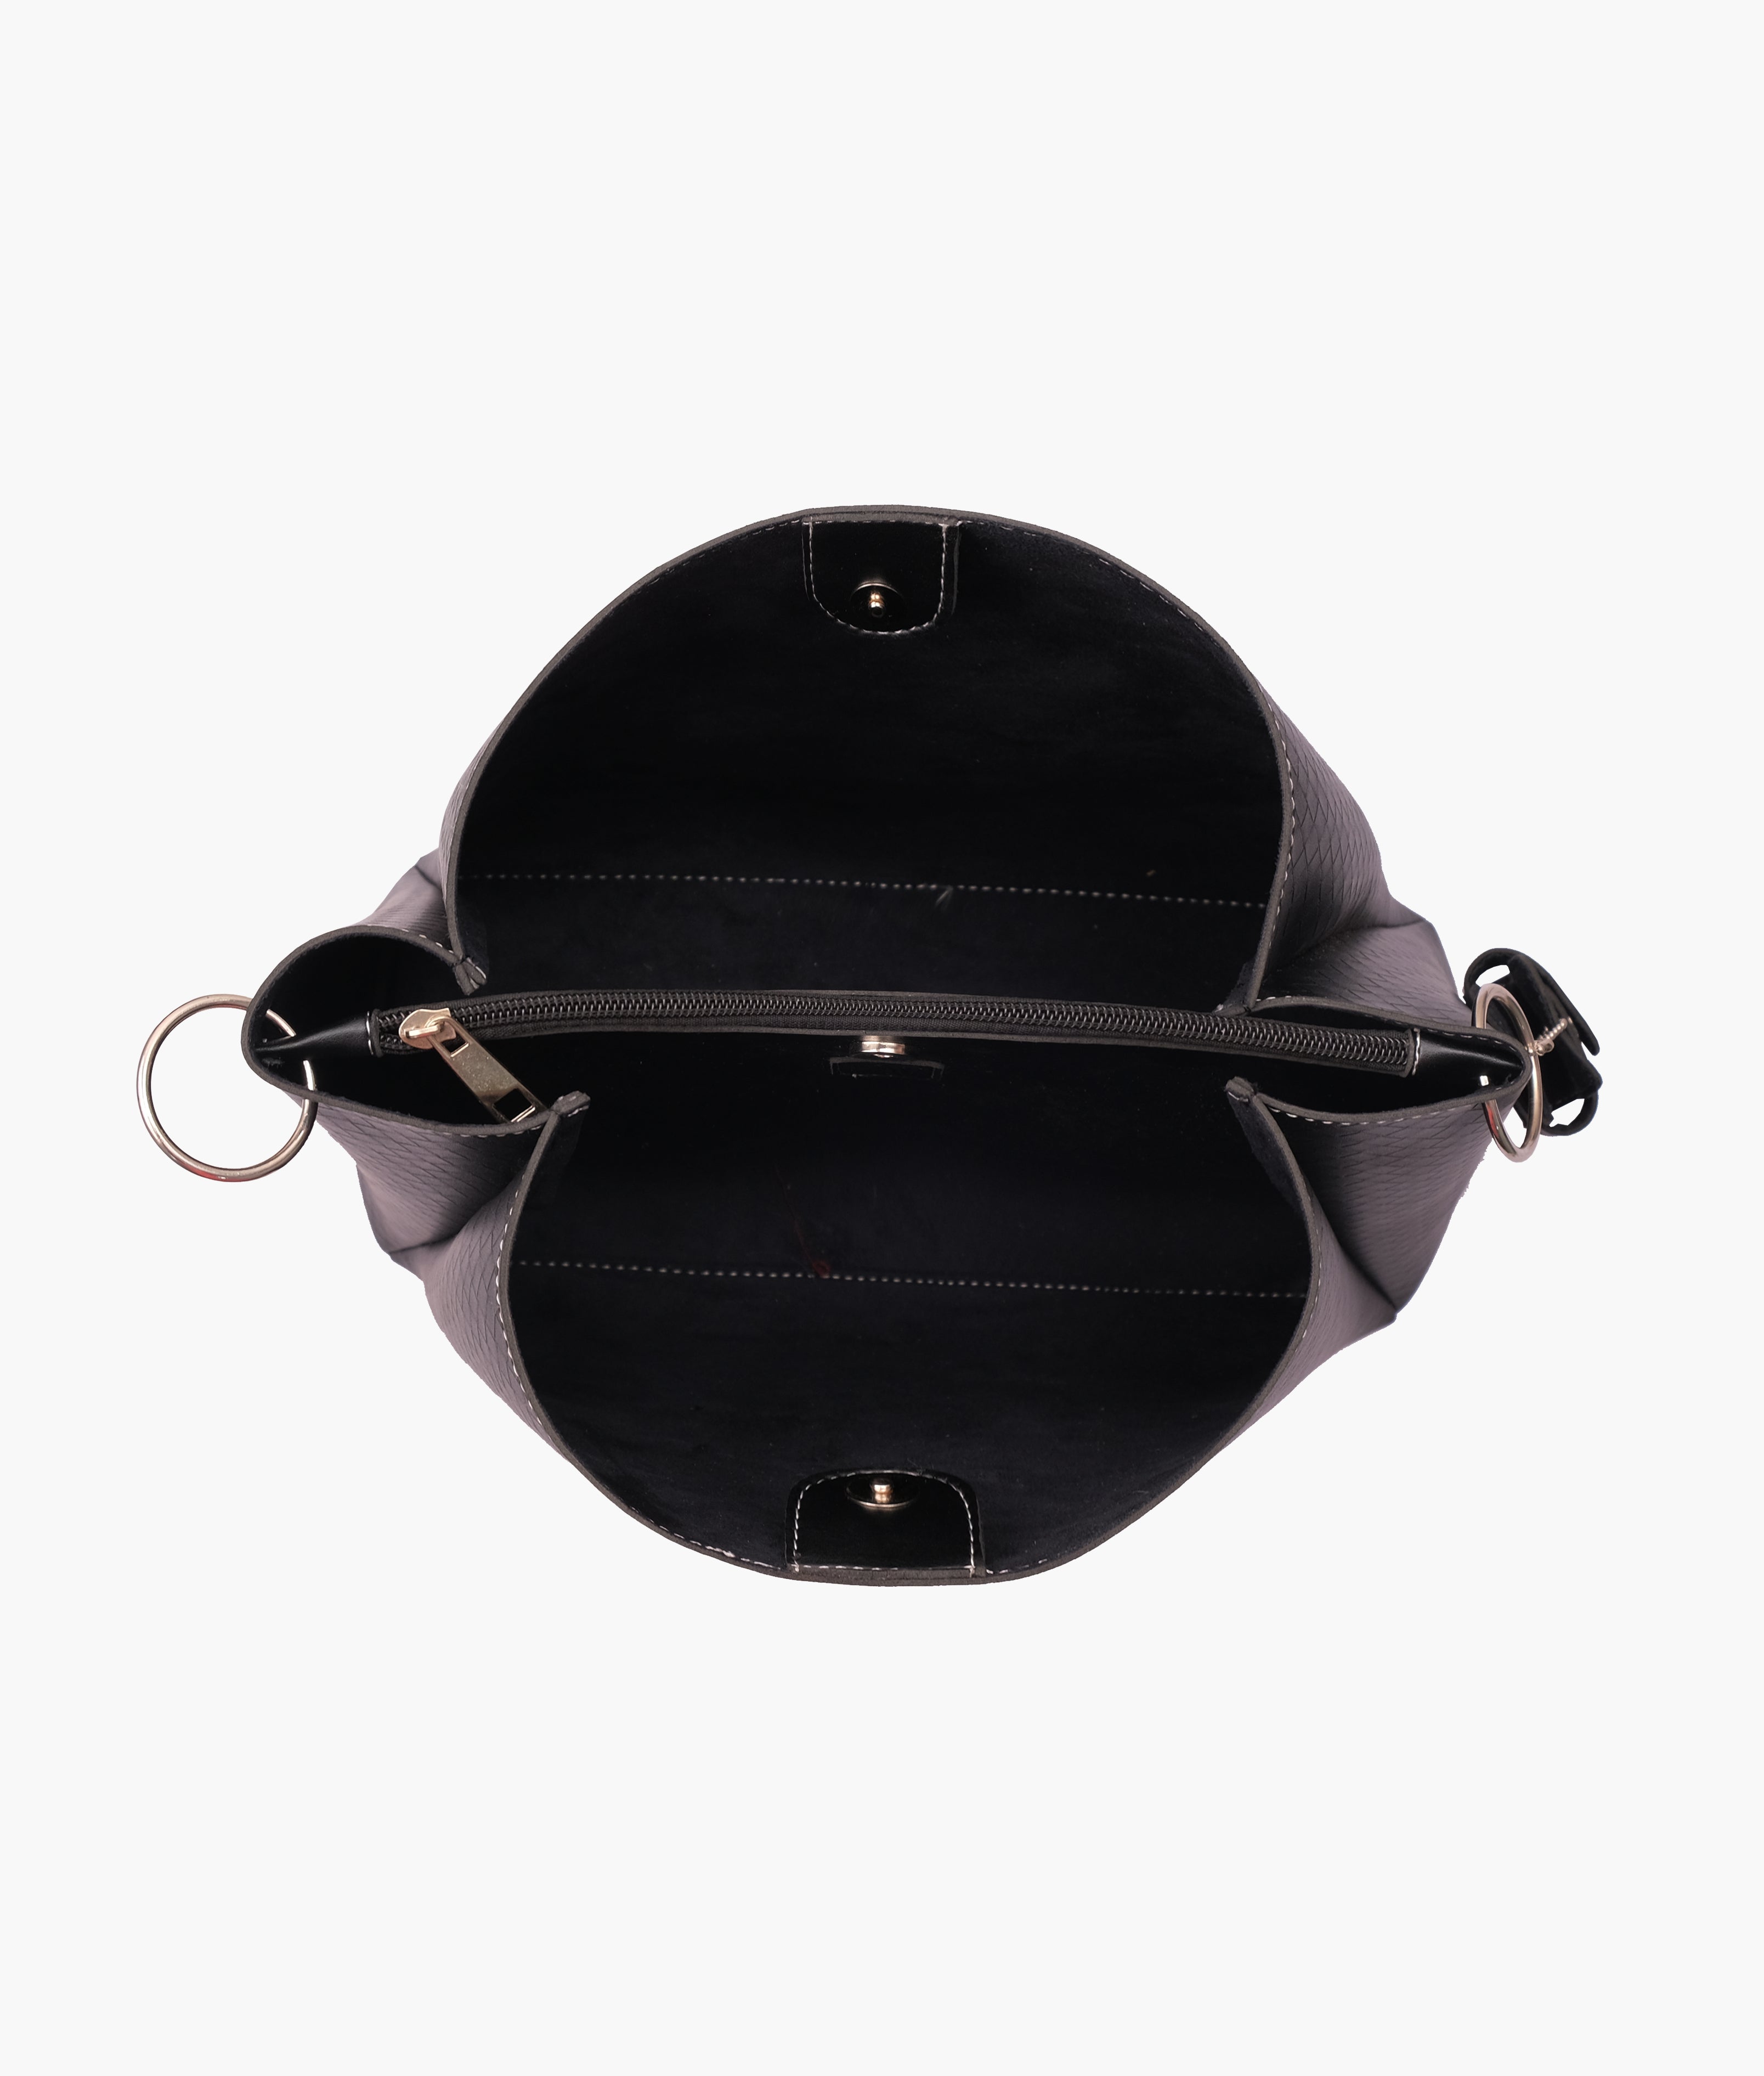 Black weaved handbag with braided handle